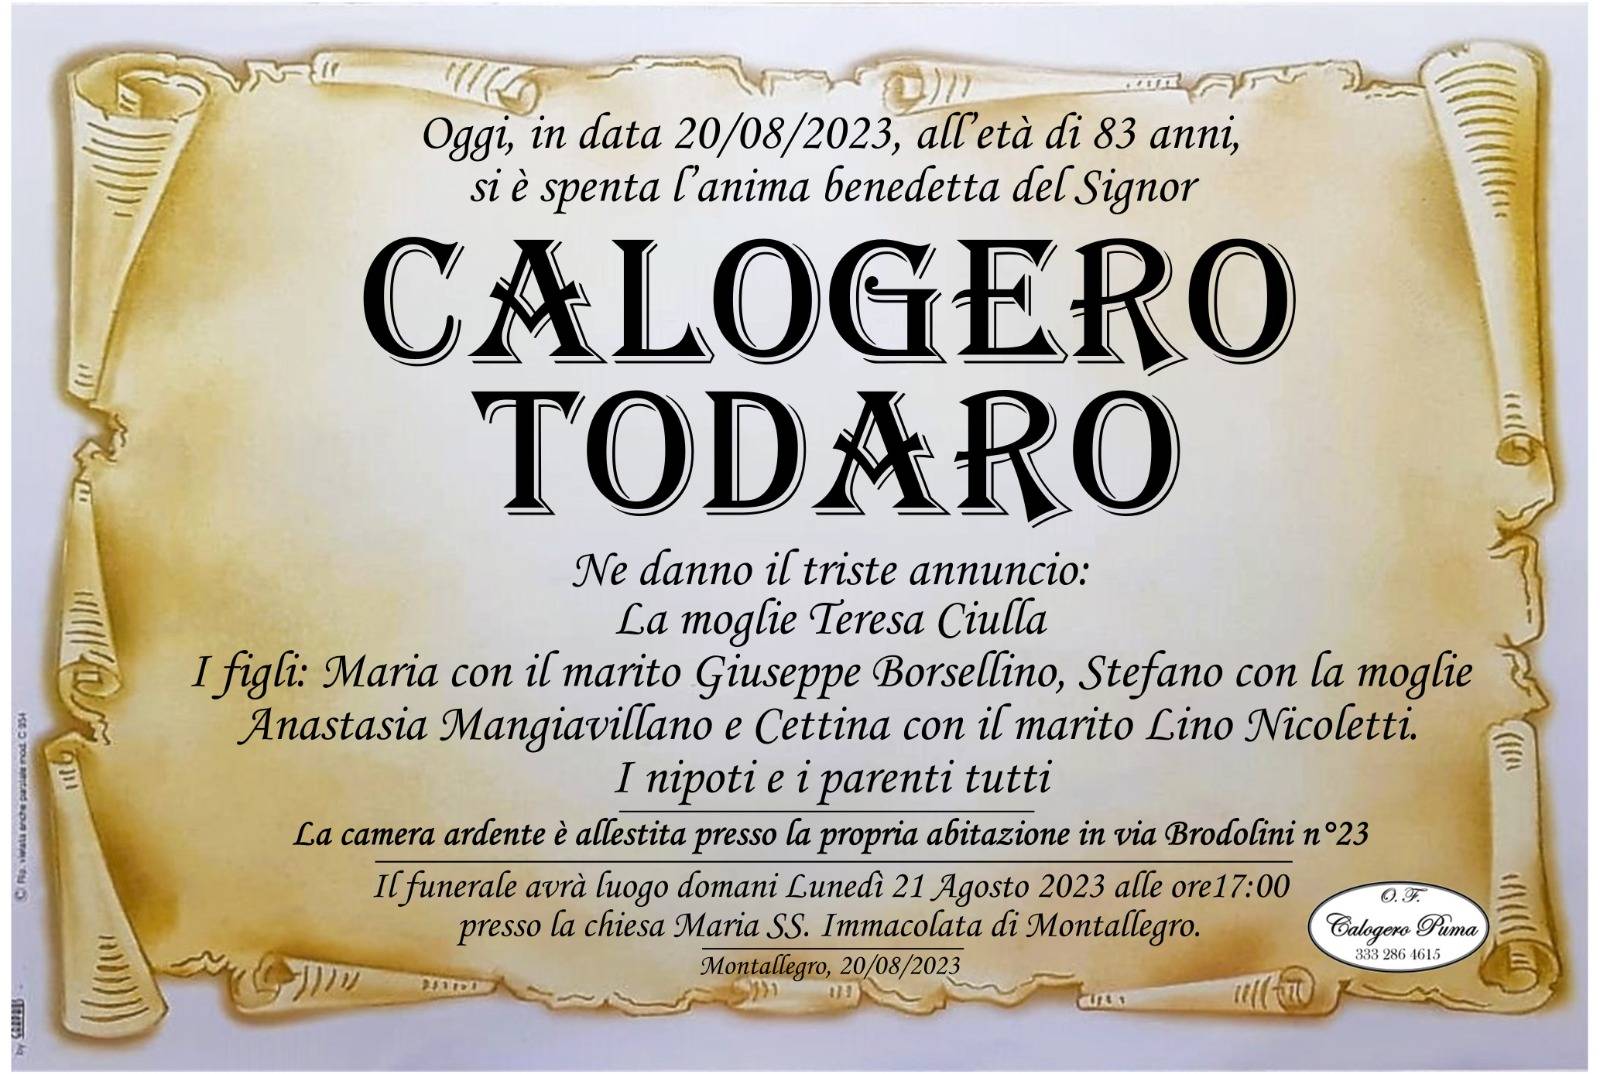 Calogero Todaro